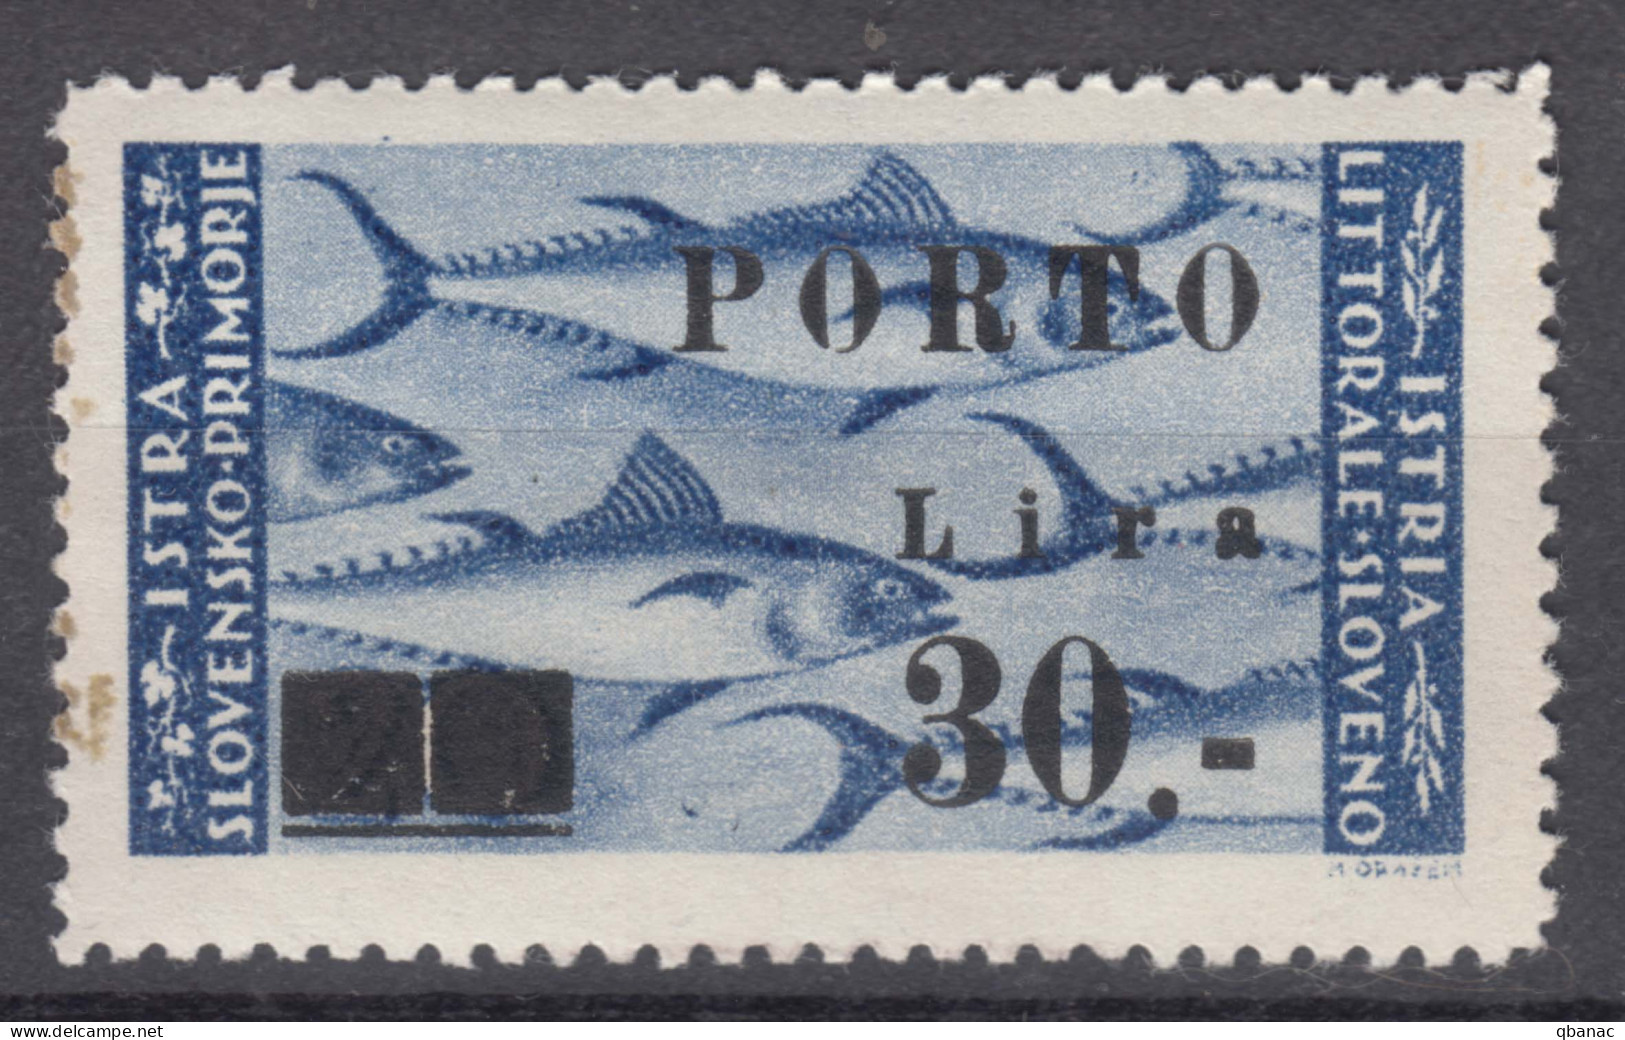 Istria Litorale Yugoslavia Occupation, Porto 1946 Sassone#19 Overprint II, Mint Never Hinged - Yugoslavian Occ.: Istria